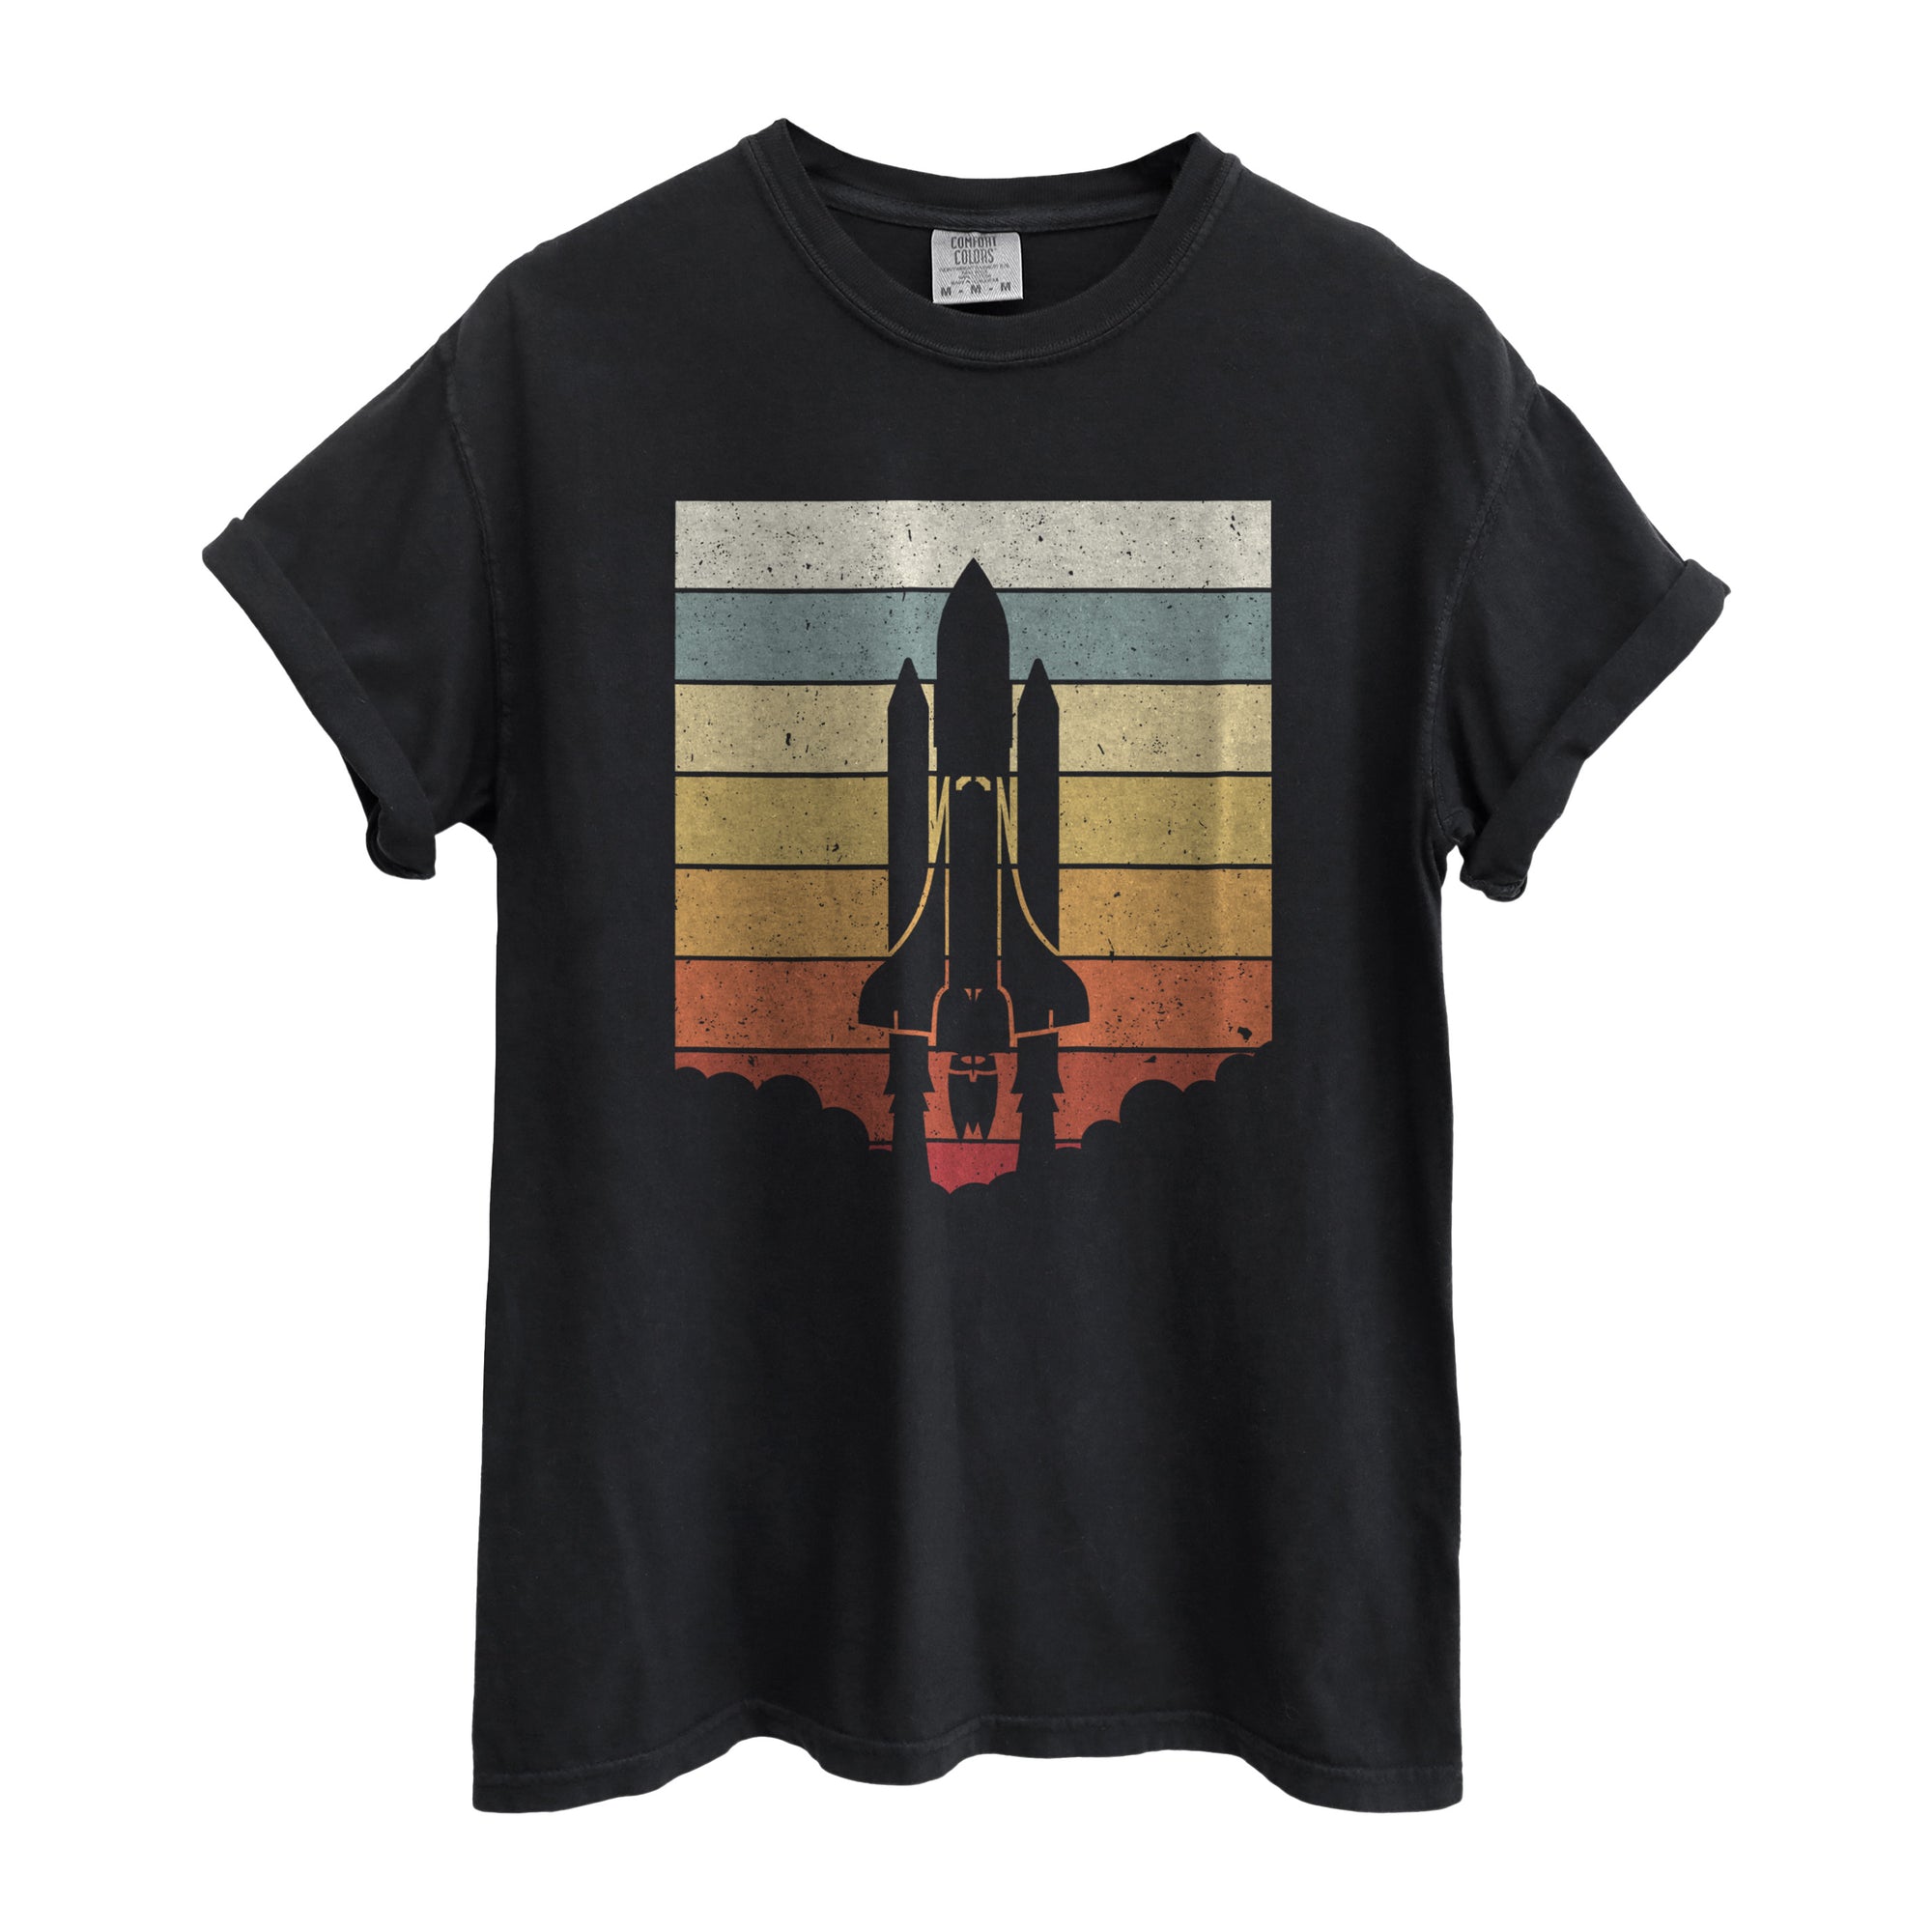 Retro Rocket Oversized Shirt for Women Garment-Dyed Graphic Tee